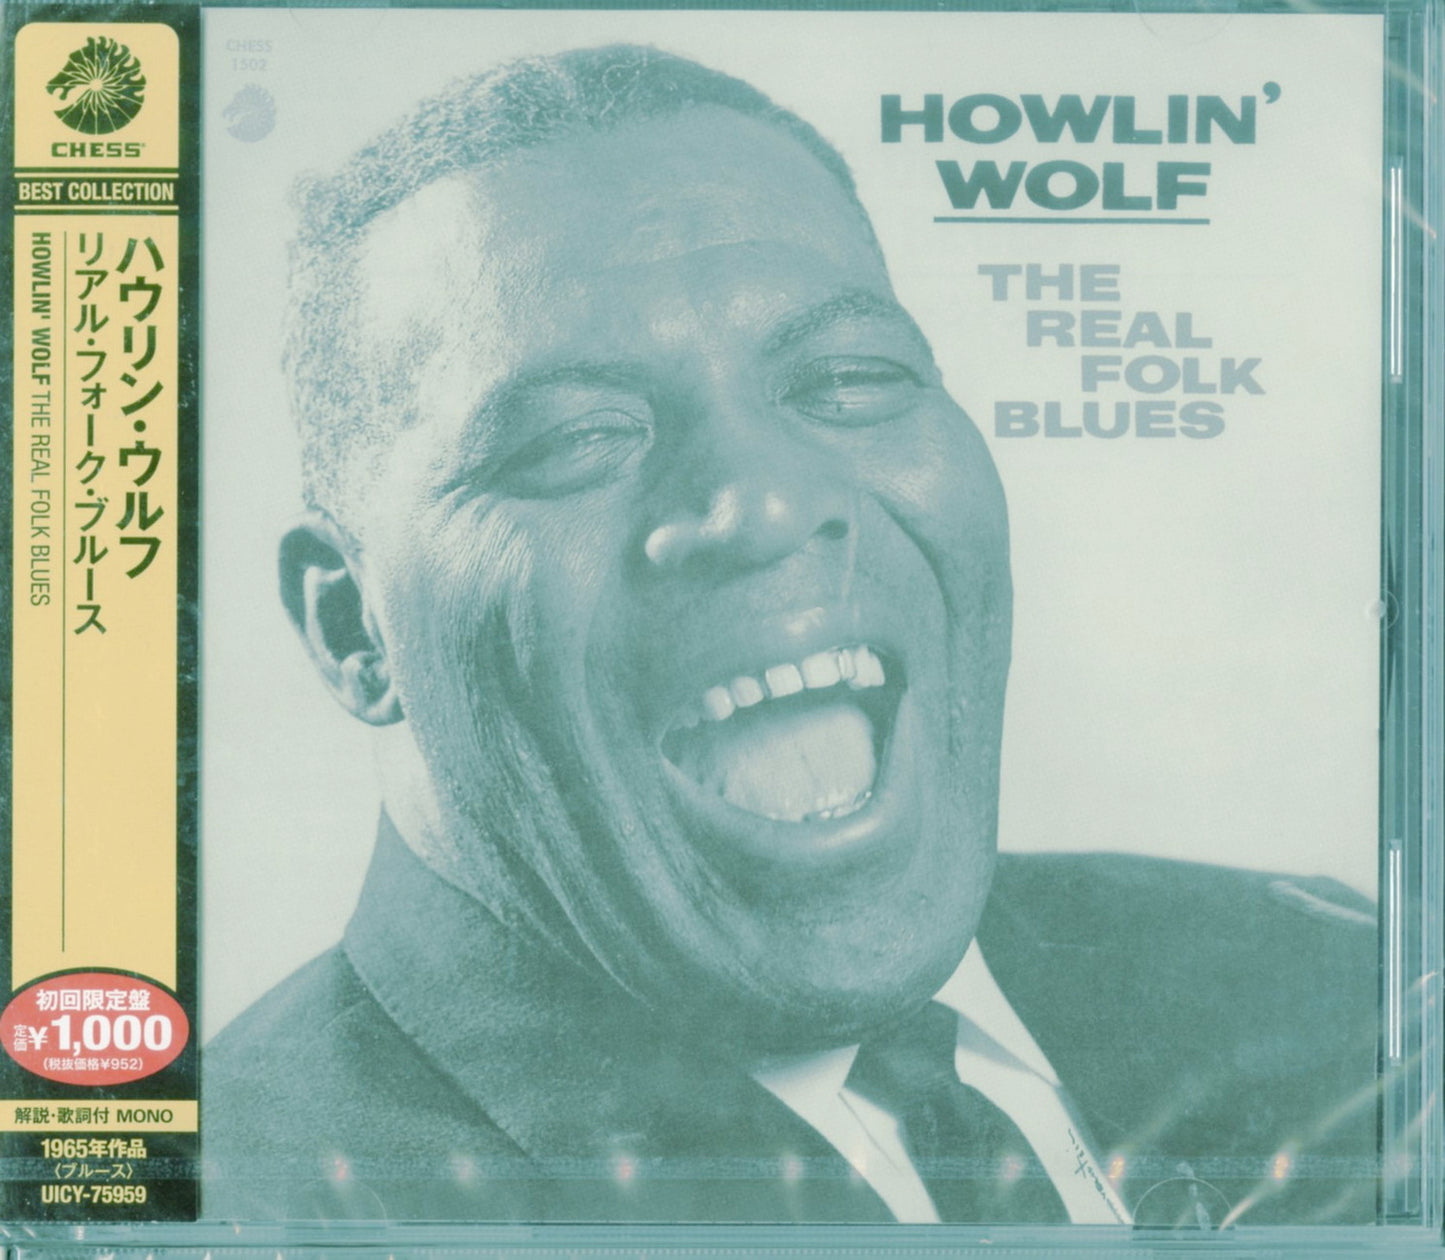 Howlin' Wolf - The Real Folk Blues - Japan  CD Limited Edition